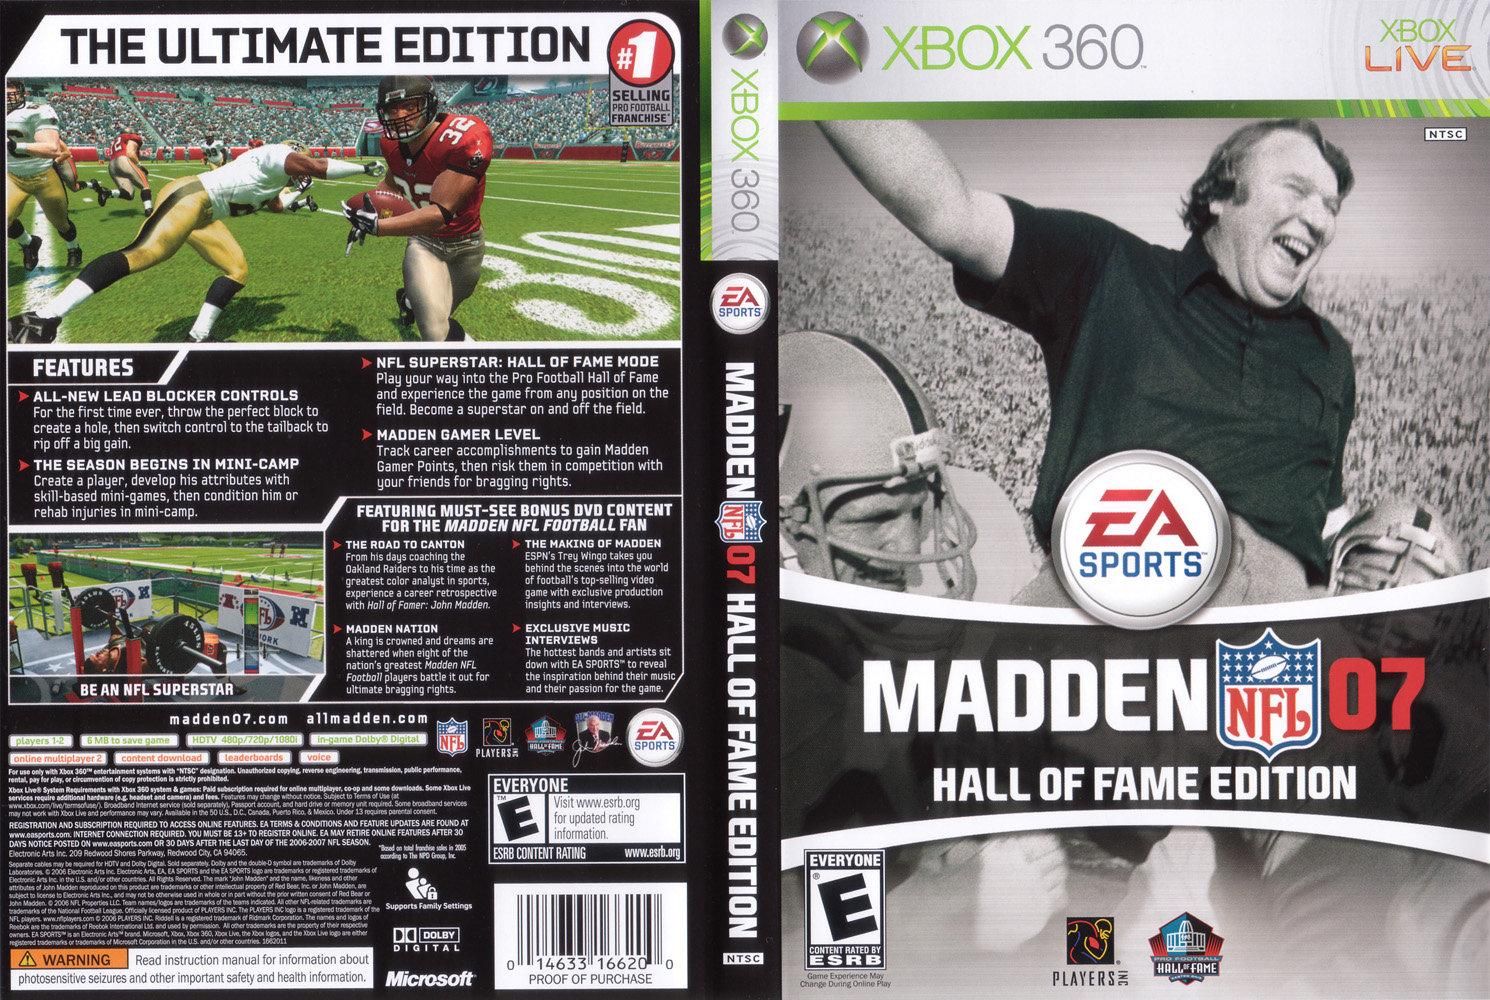 John Madden 23 22 07 Hall of Fame Edition